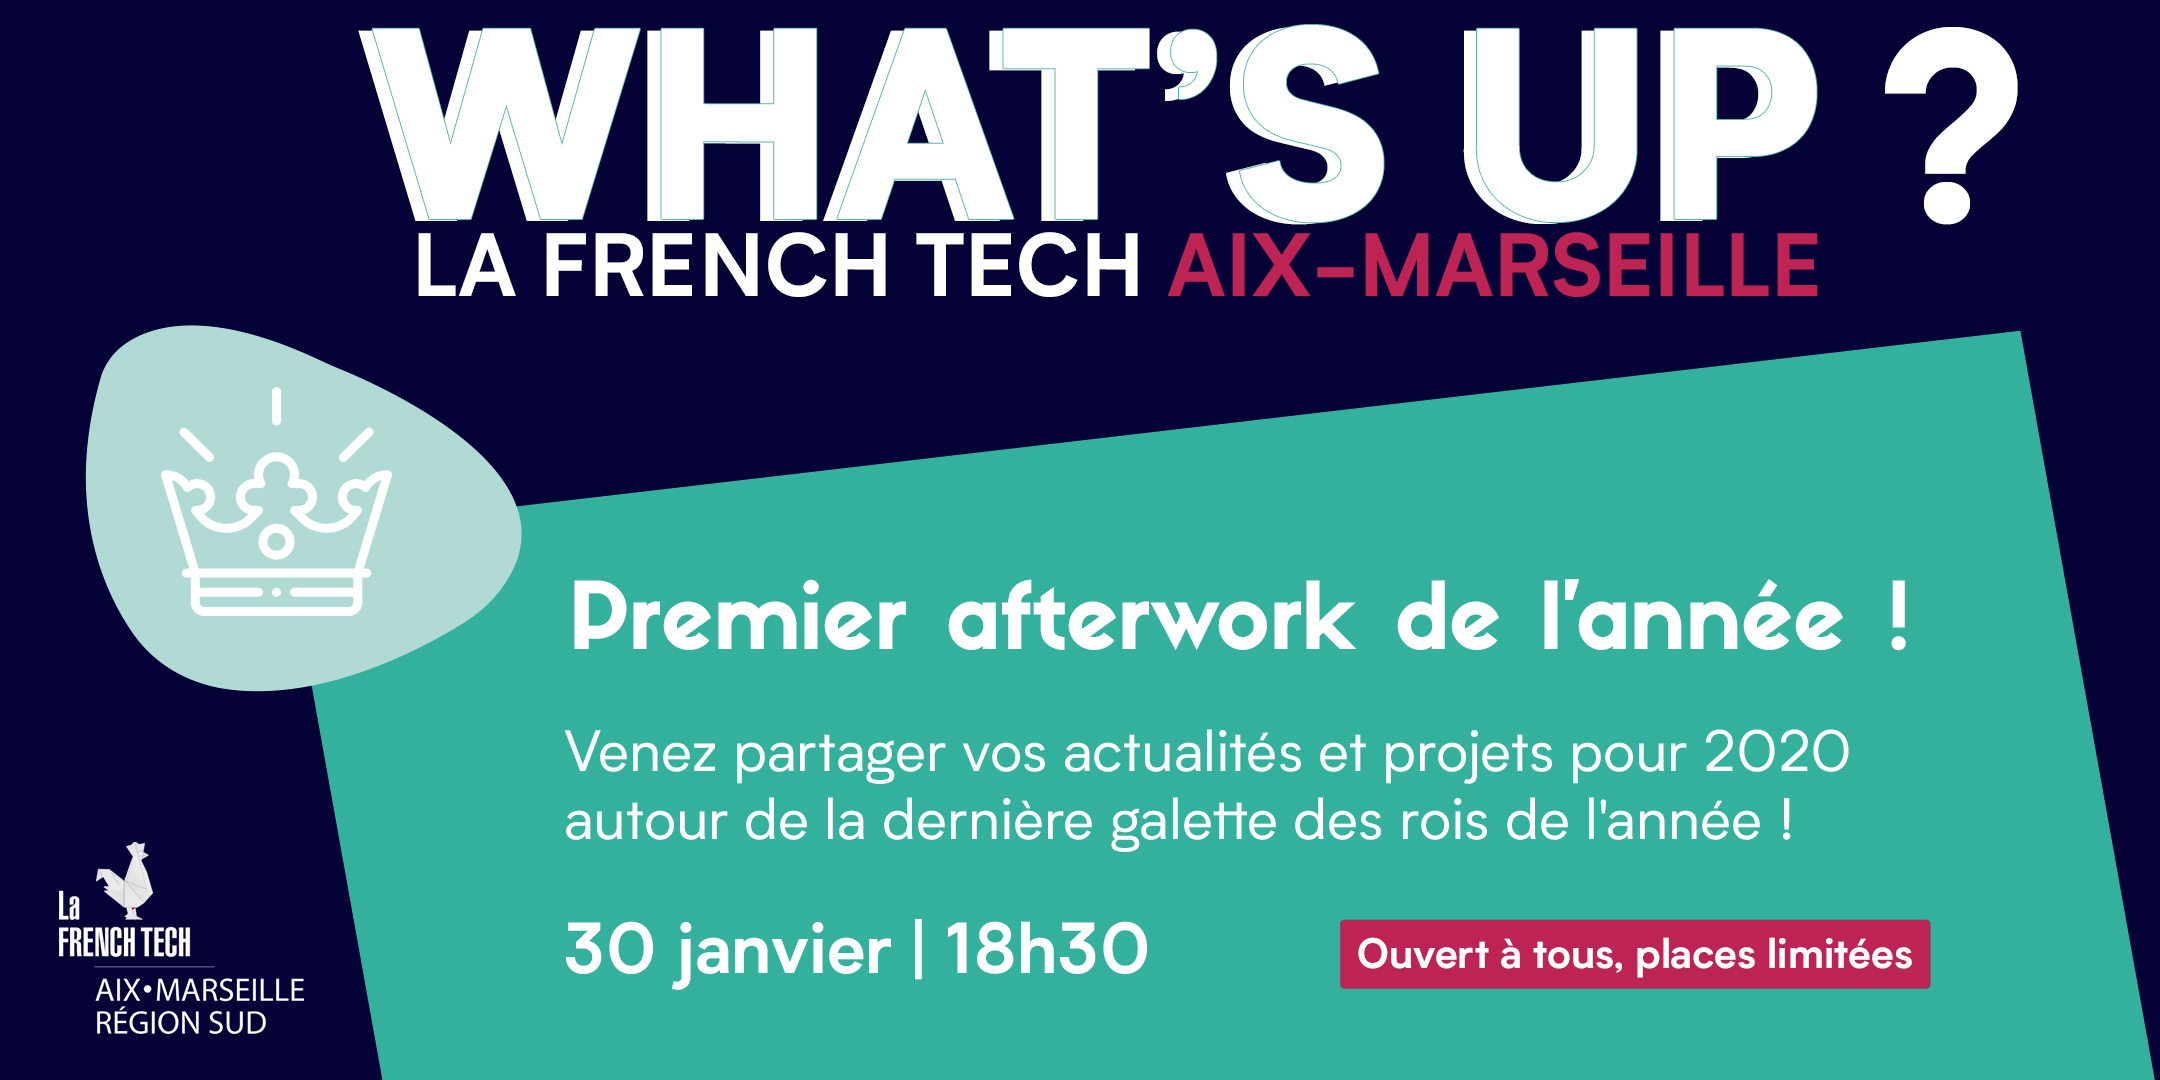 What’s up la French Tech Aix-Marseille